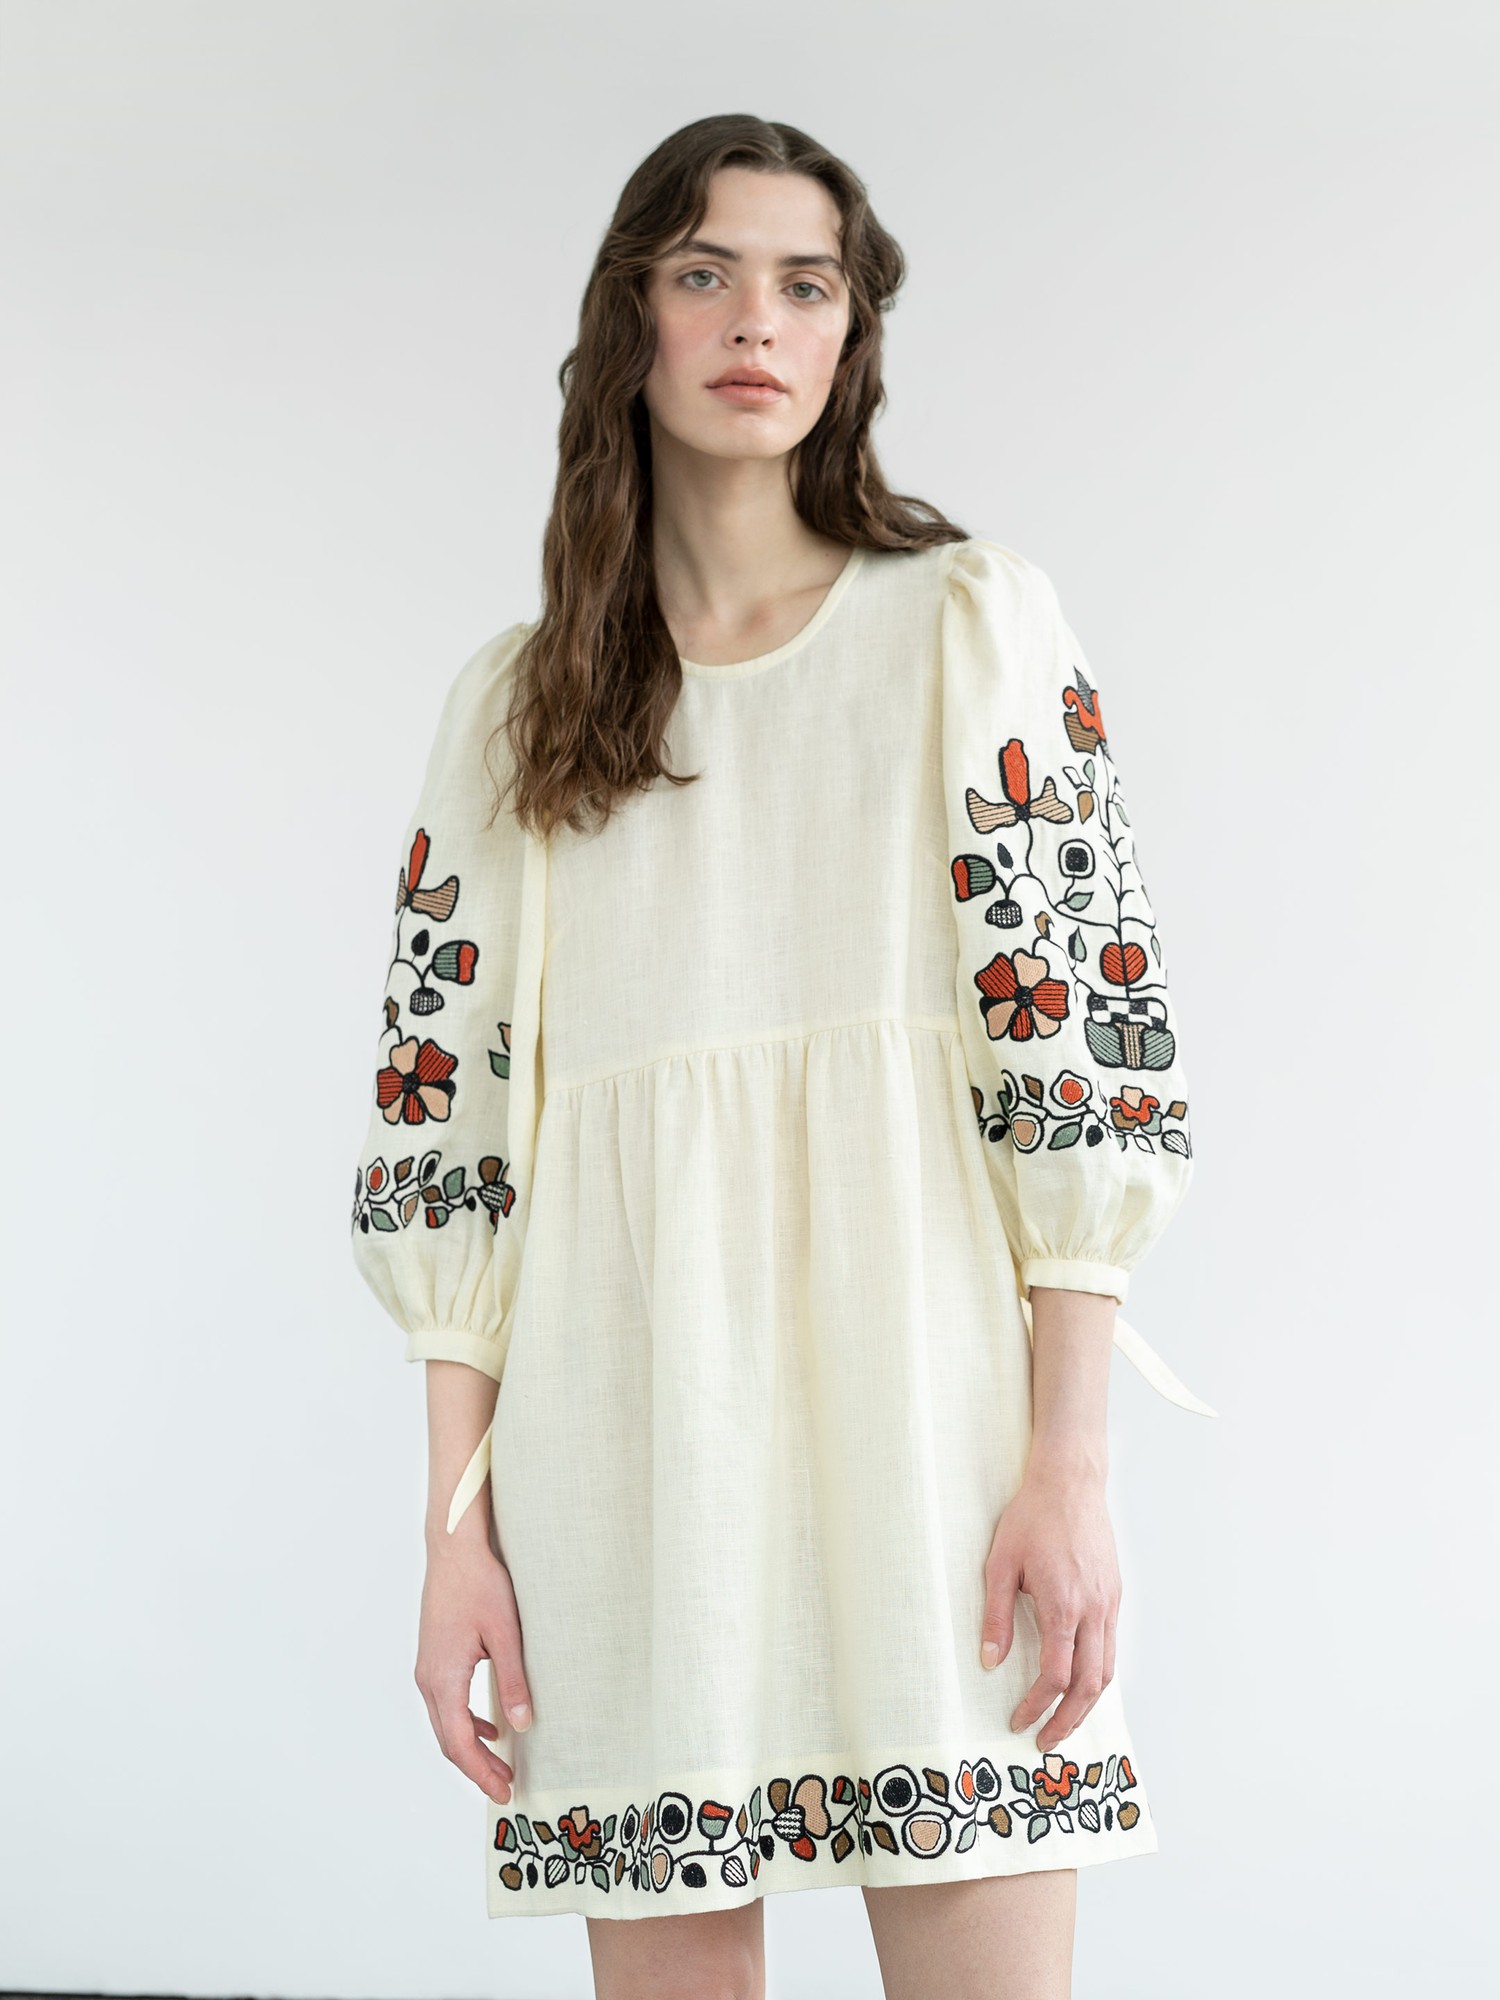 Linen dress with embroidery Zadorozhniy Dress